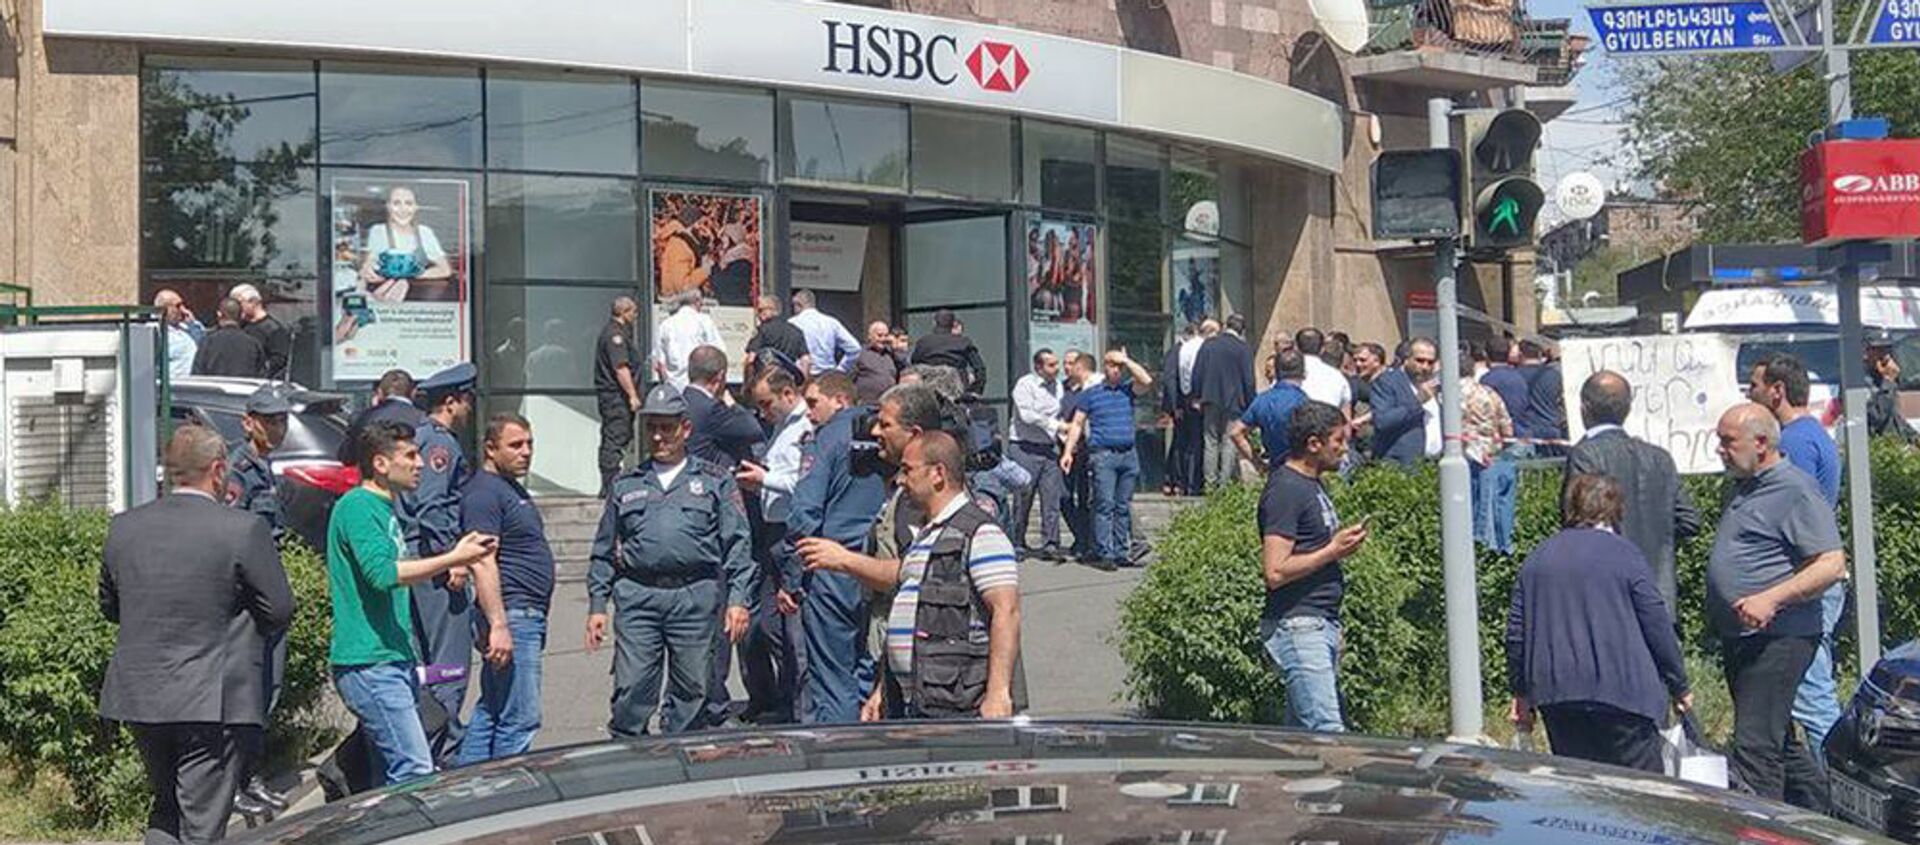 Банк HSBC на проспекте Комитаса (3 мая 2018). Еревaн - Sputnik Грузия, 1920, 03.05.2018